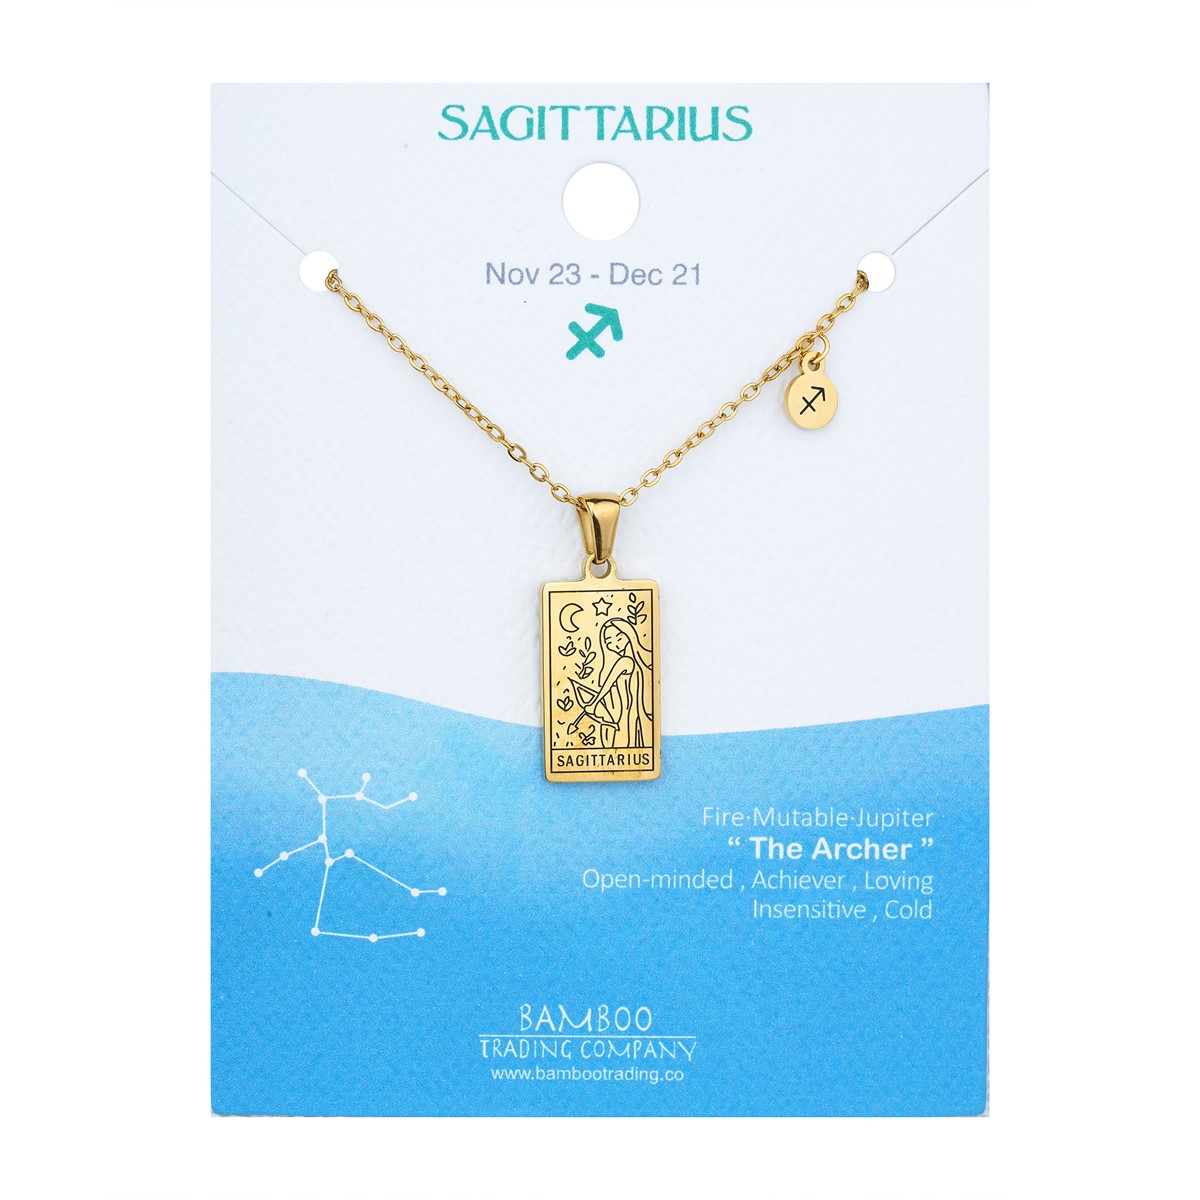 Bamboo Gold Necklace Company Trading Sagittarius Zodiac |